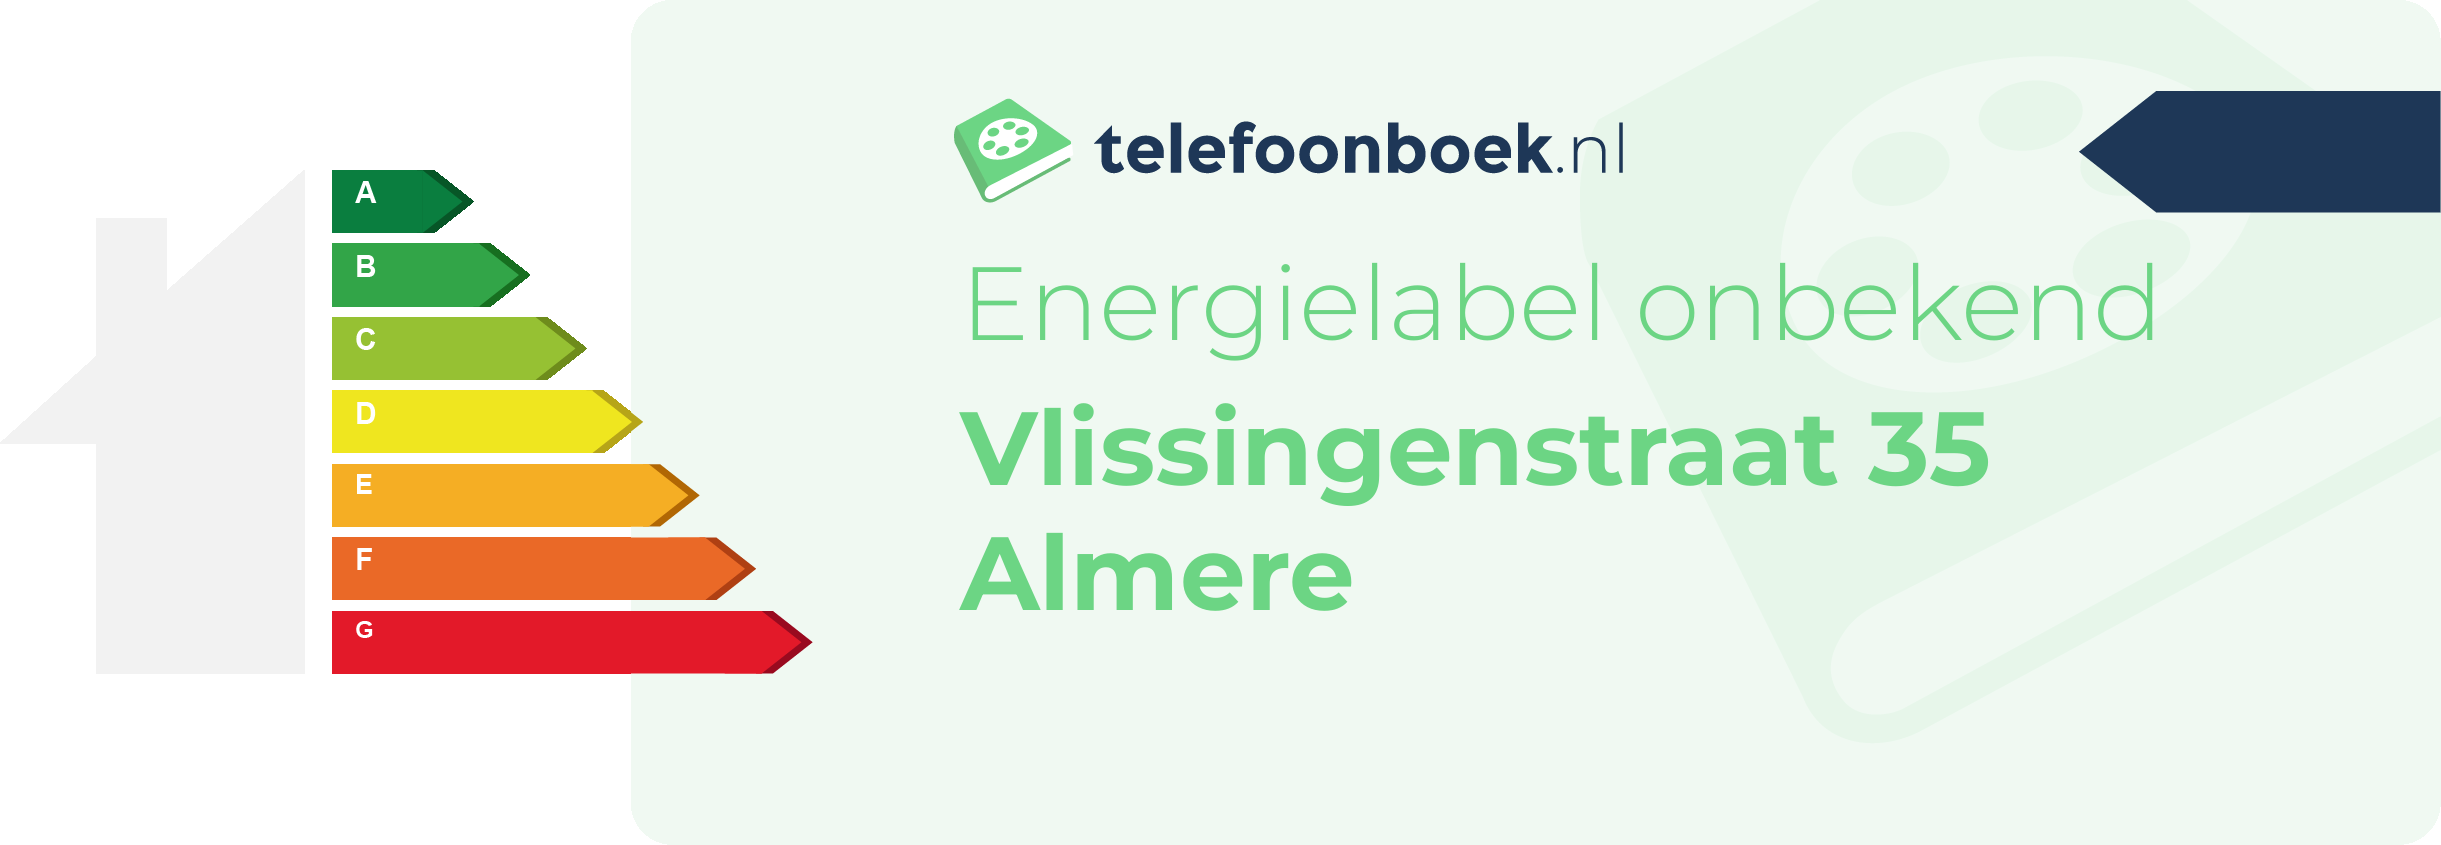 Energielabel Vlissingenstraat 35 Almere